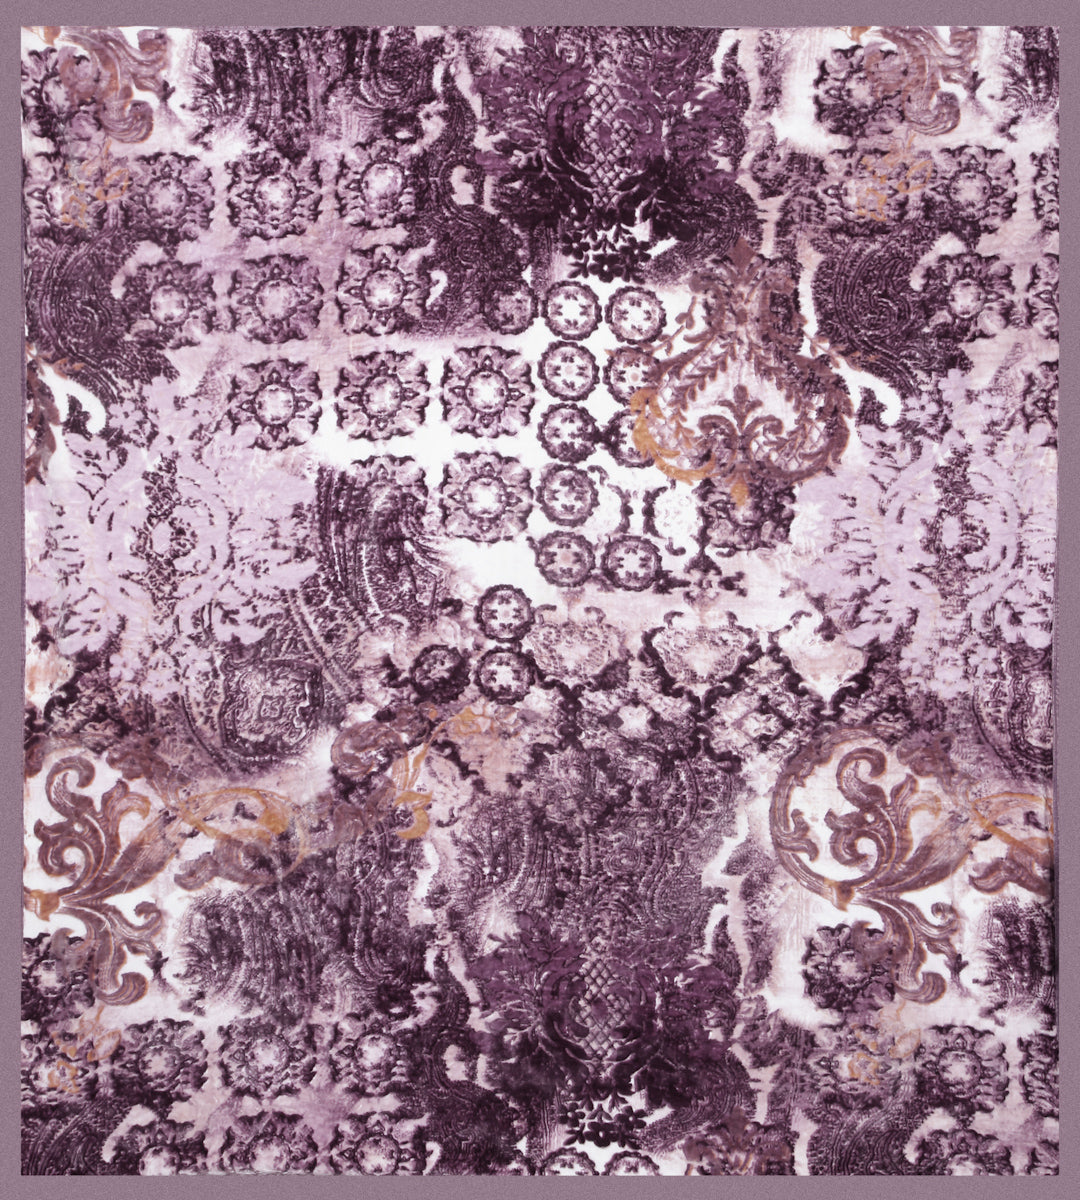 Arrabi Purple Floral Wool Blend 1100 GSM Full Size Double Bed Blanket (220 X 200 cm)